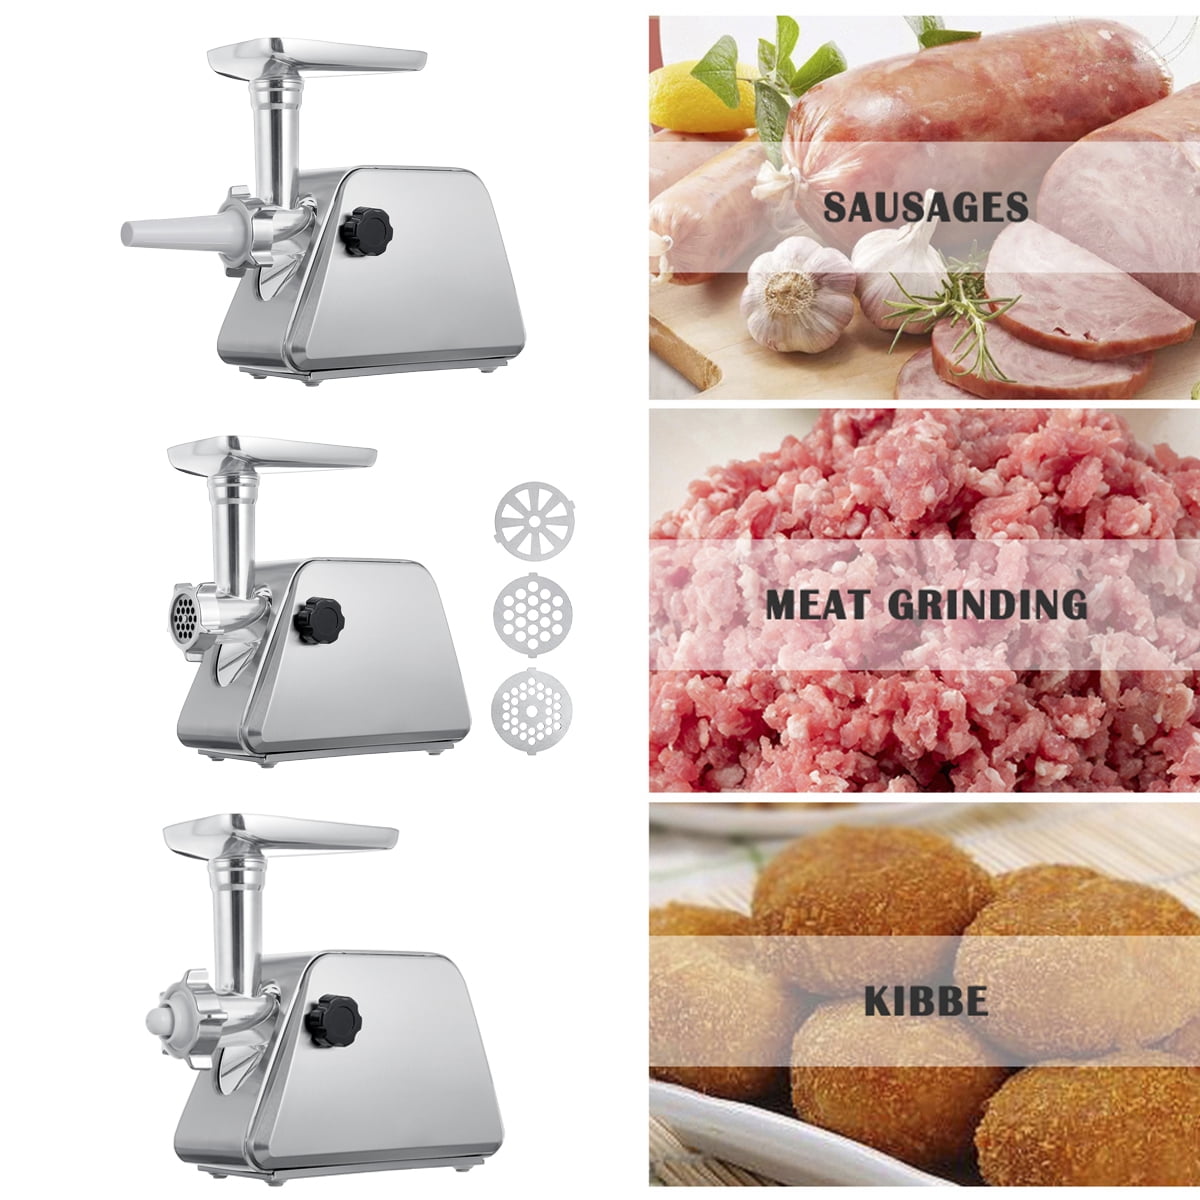 VNIMTI Electric Meat Grinder, 2800W Meat Grinders for Home Use, Heavy Duty  Food Grinder, Sausage Maker Meat Mincer with Blade, 3 Plates, Sausage